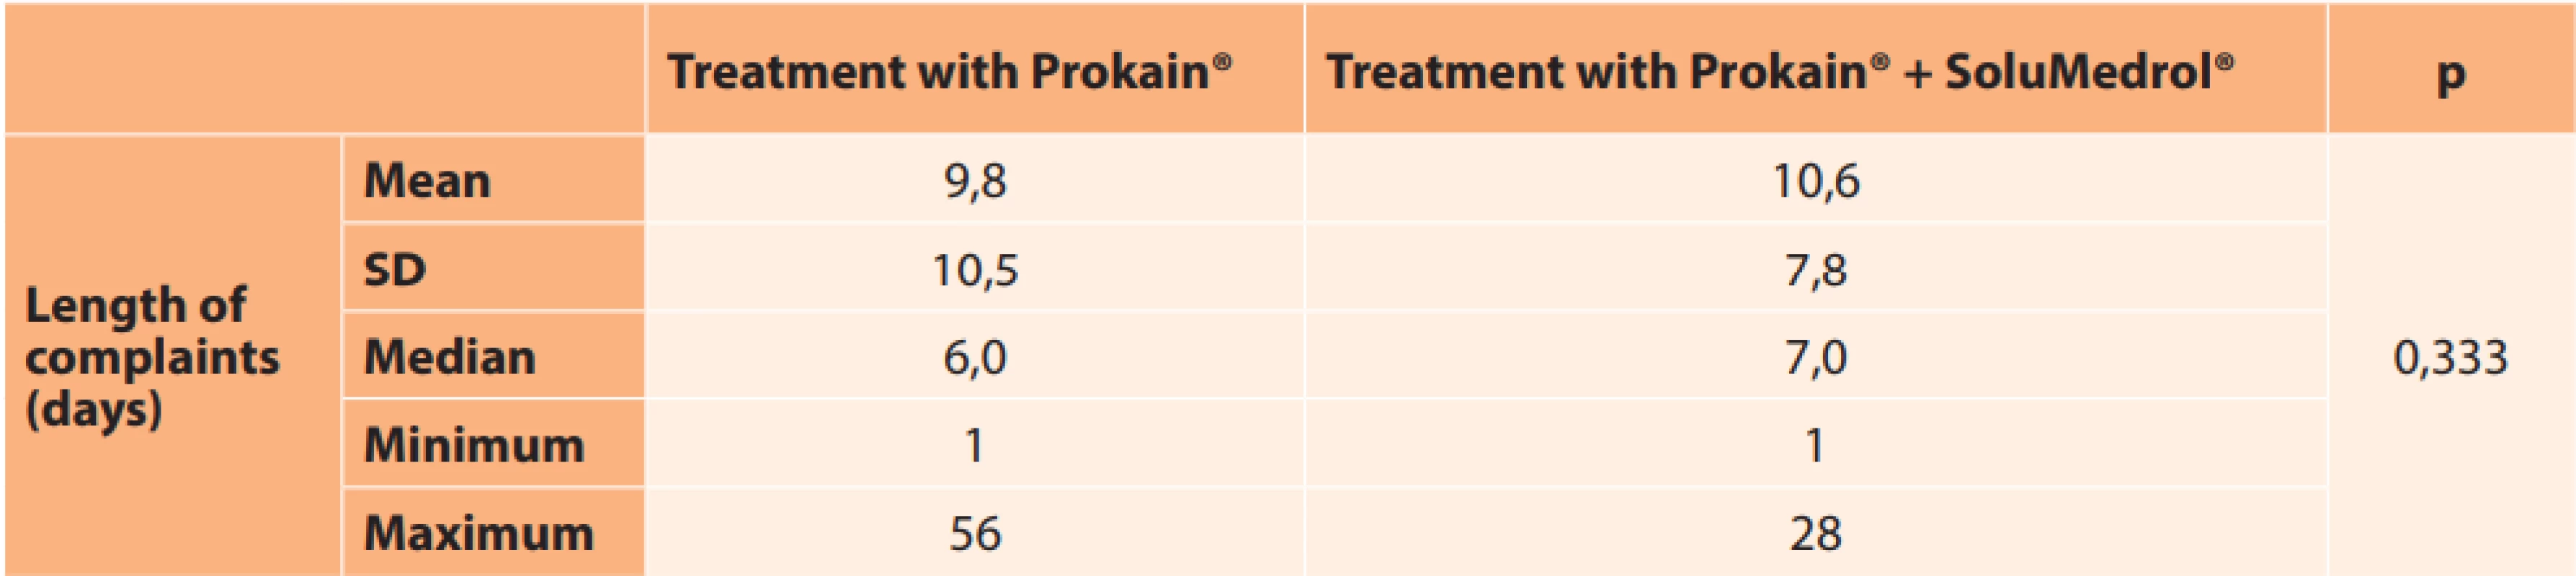 Average length of complaints before treatment